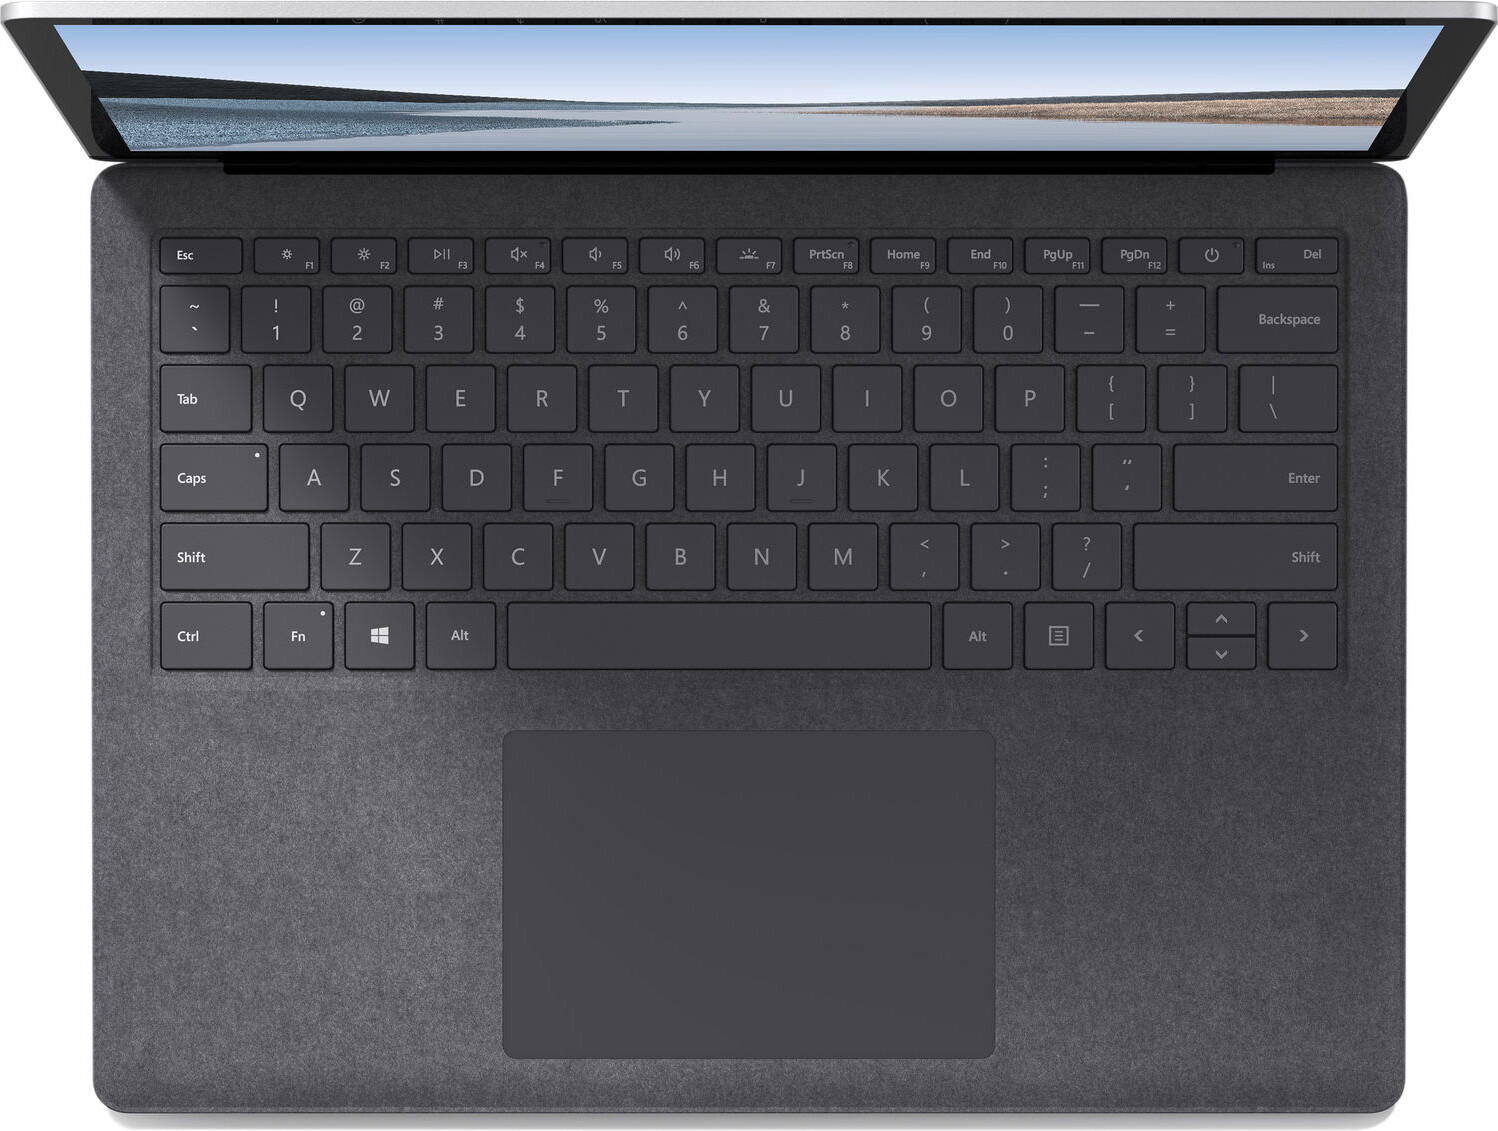 Ноутбук Microsoft Surface Laptop 3 ( Intel Core i5 1035G7/8Gb/128Gb SSD/Intel Iris Plus Graphics/13,5"/2256x1504/Нет/Windows 10 Home) Platinum with Alcantara